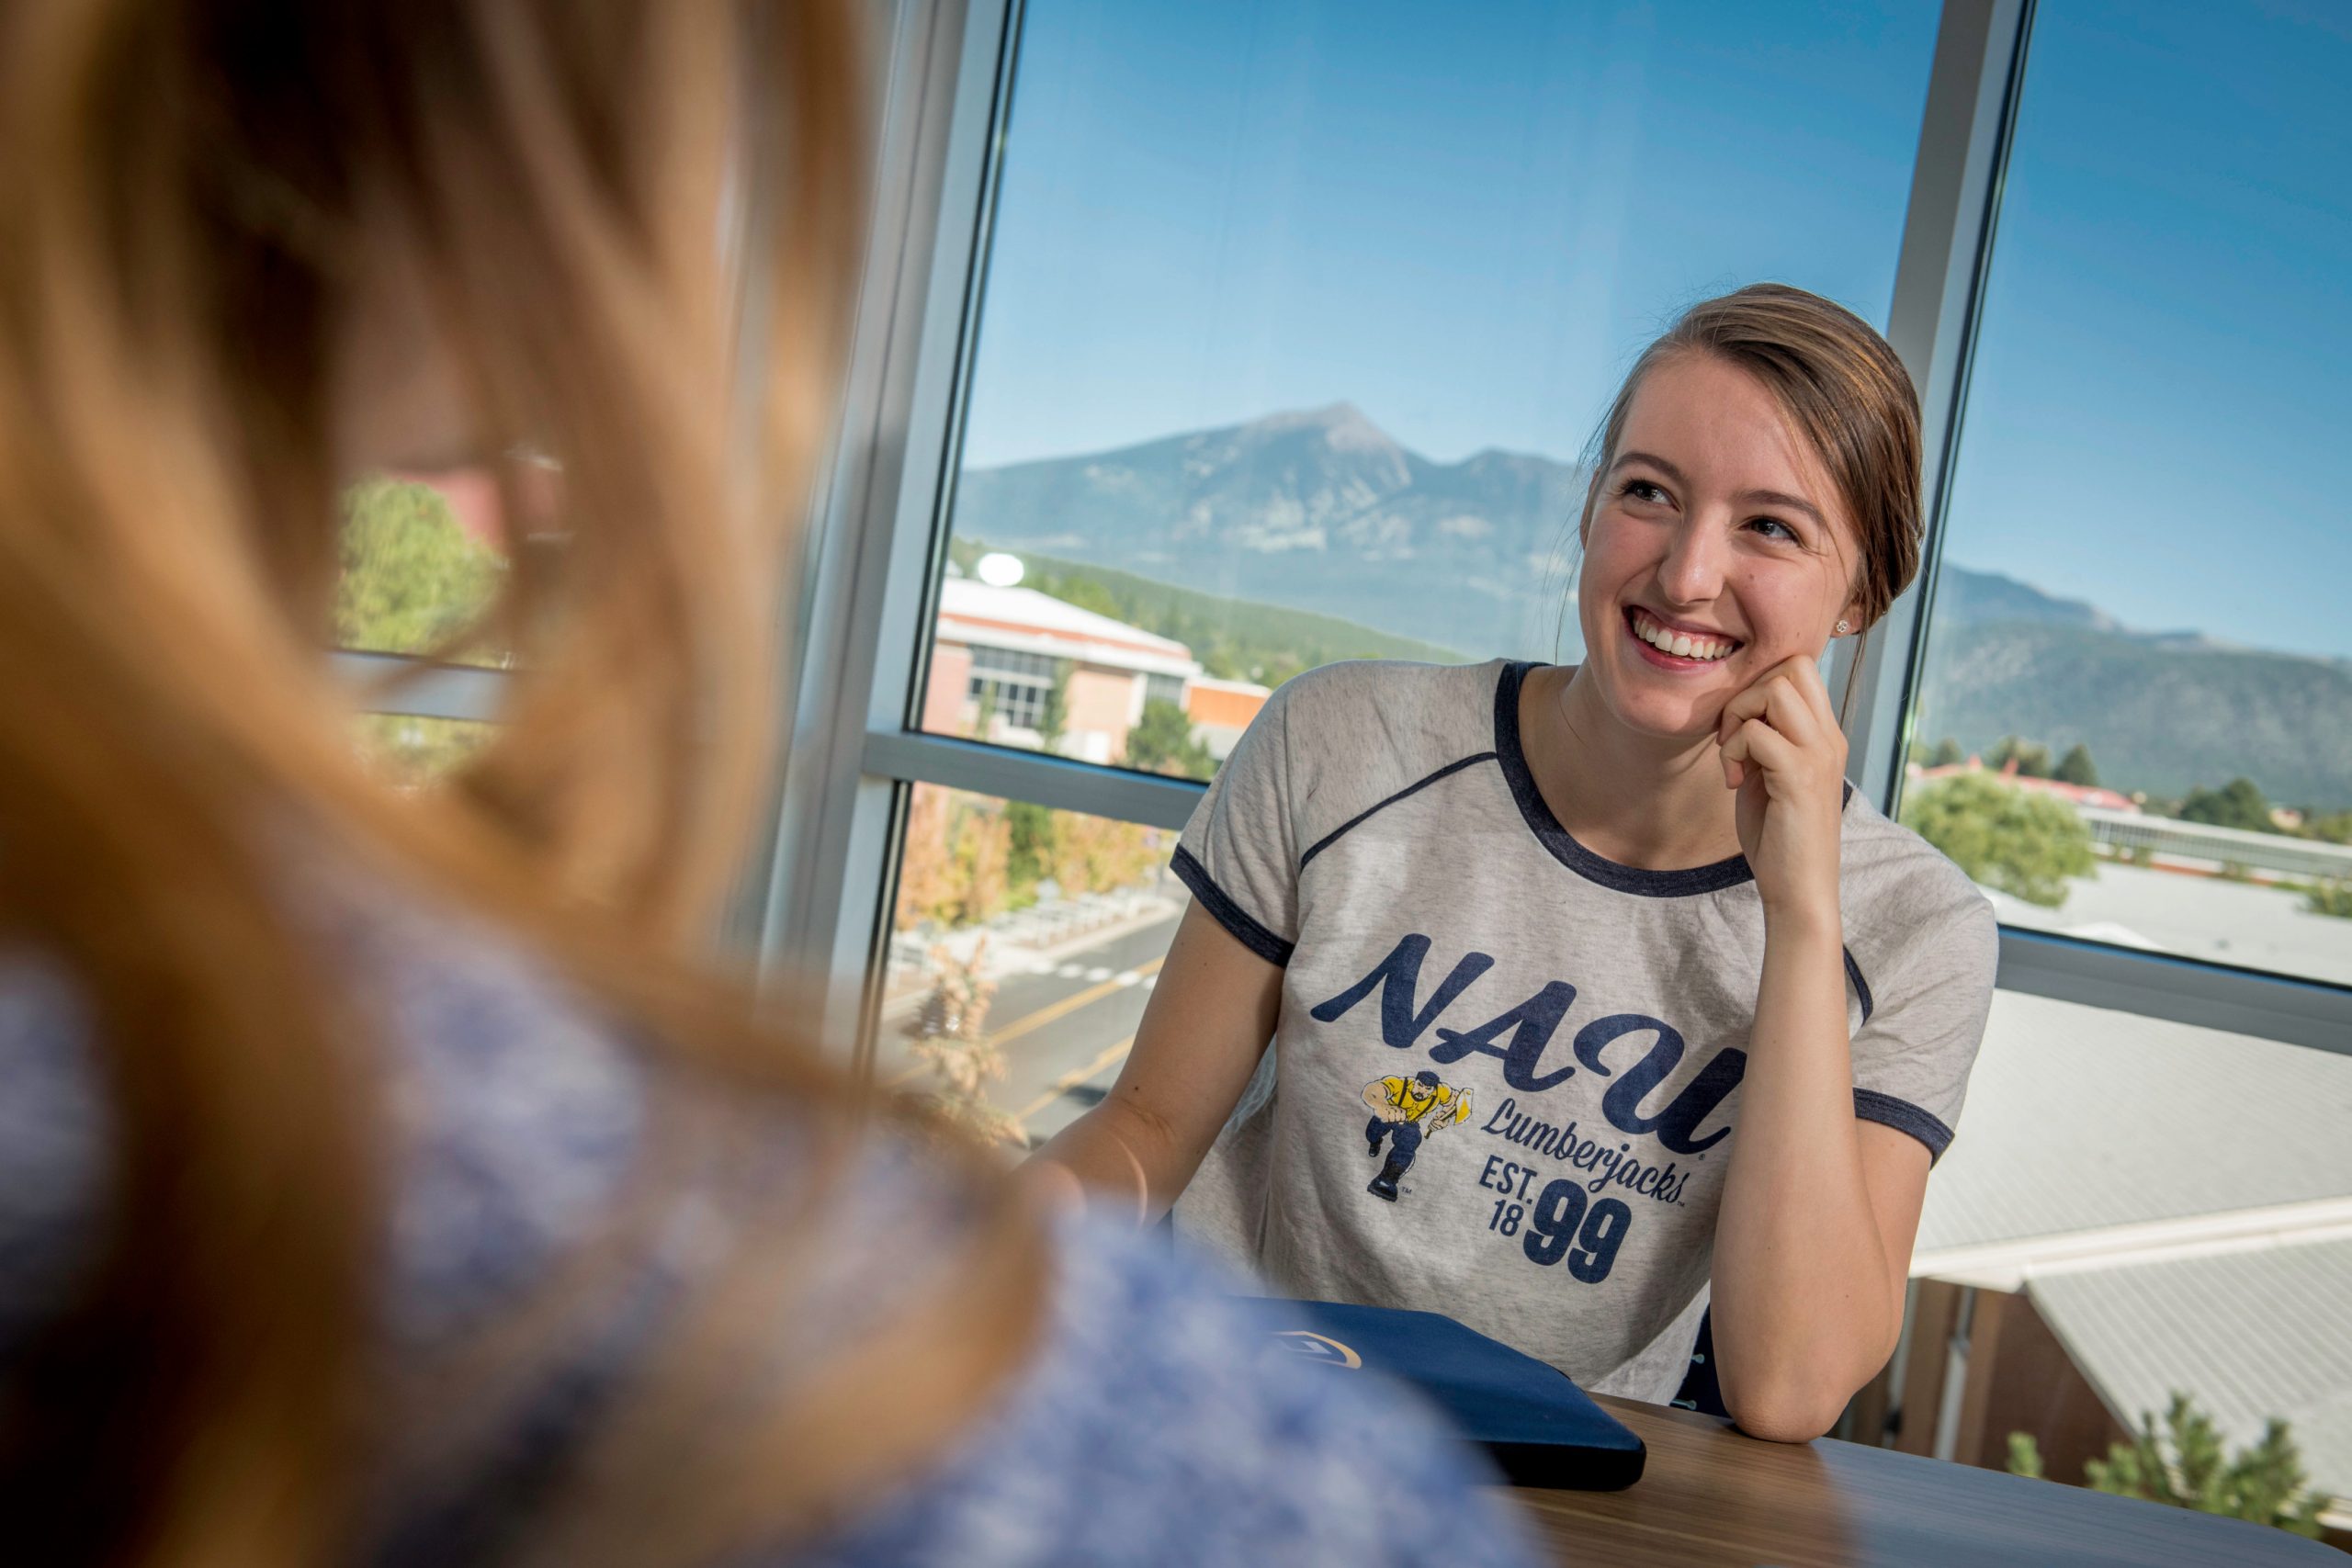 Student smiling while wearing vintage styled NAU shirt.